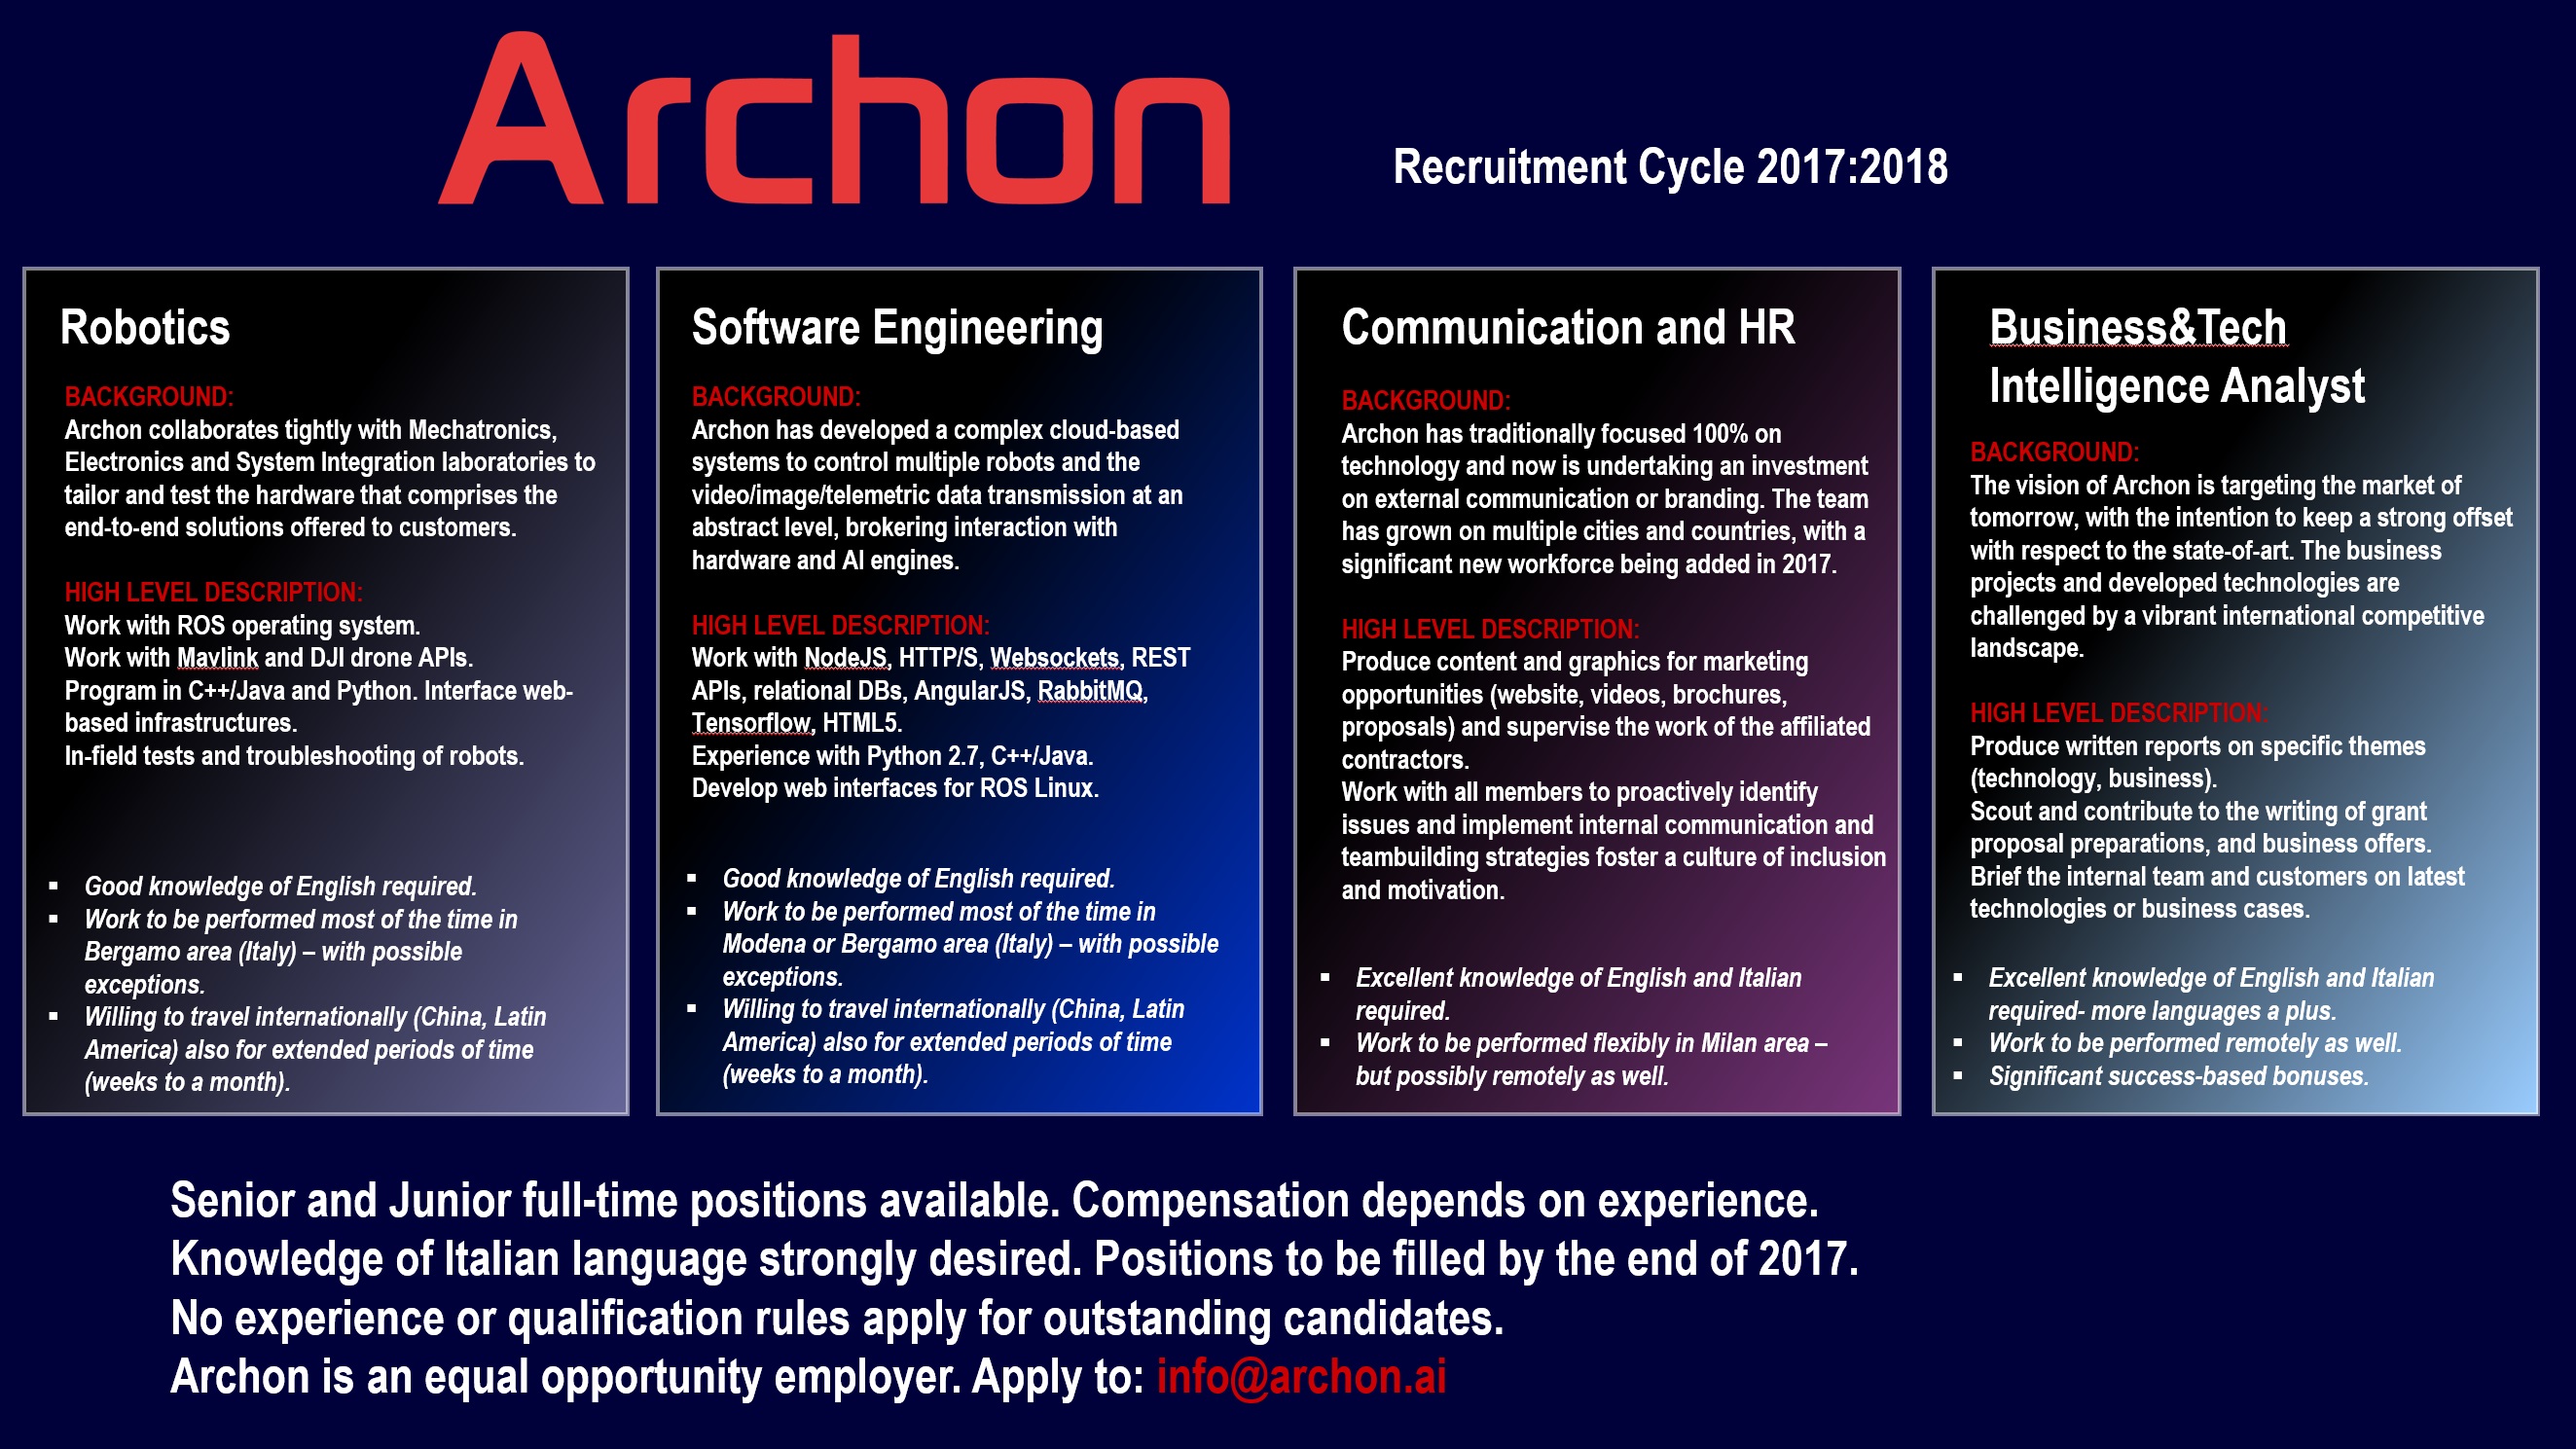 ArchonRecruitment.jpg